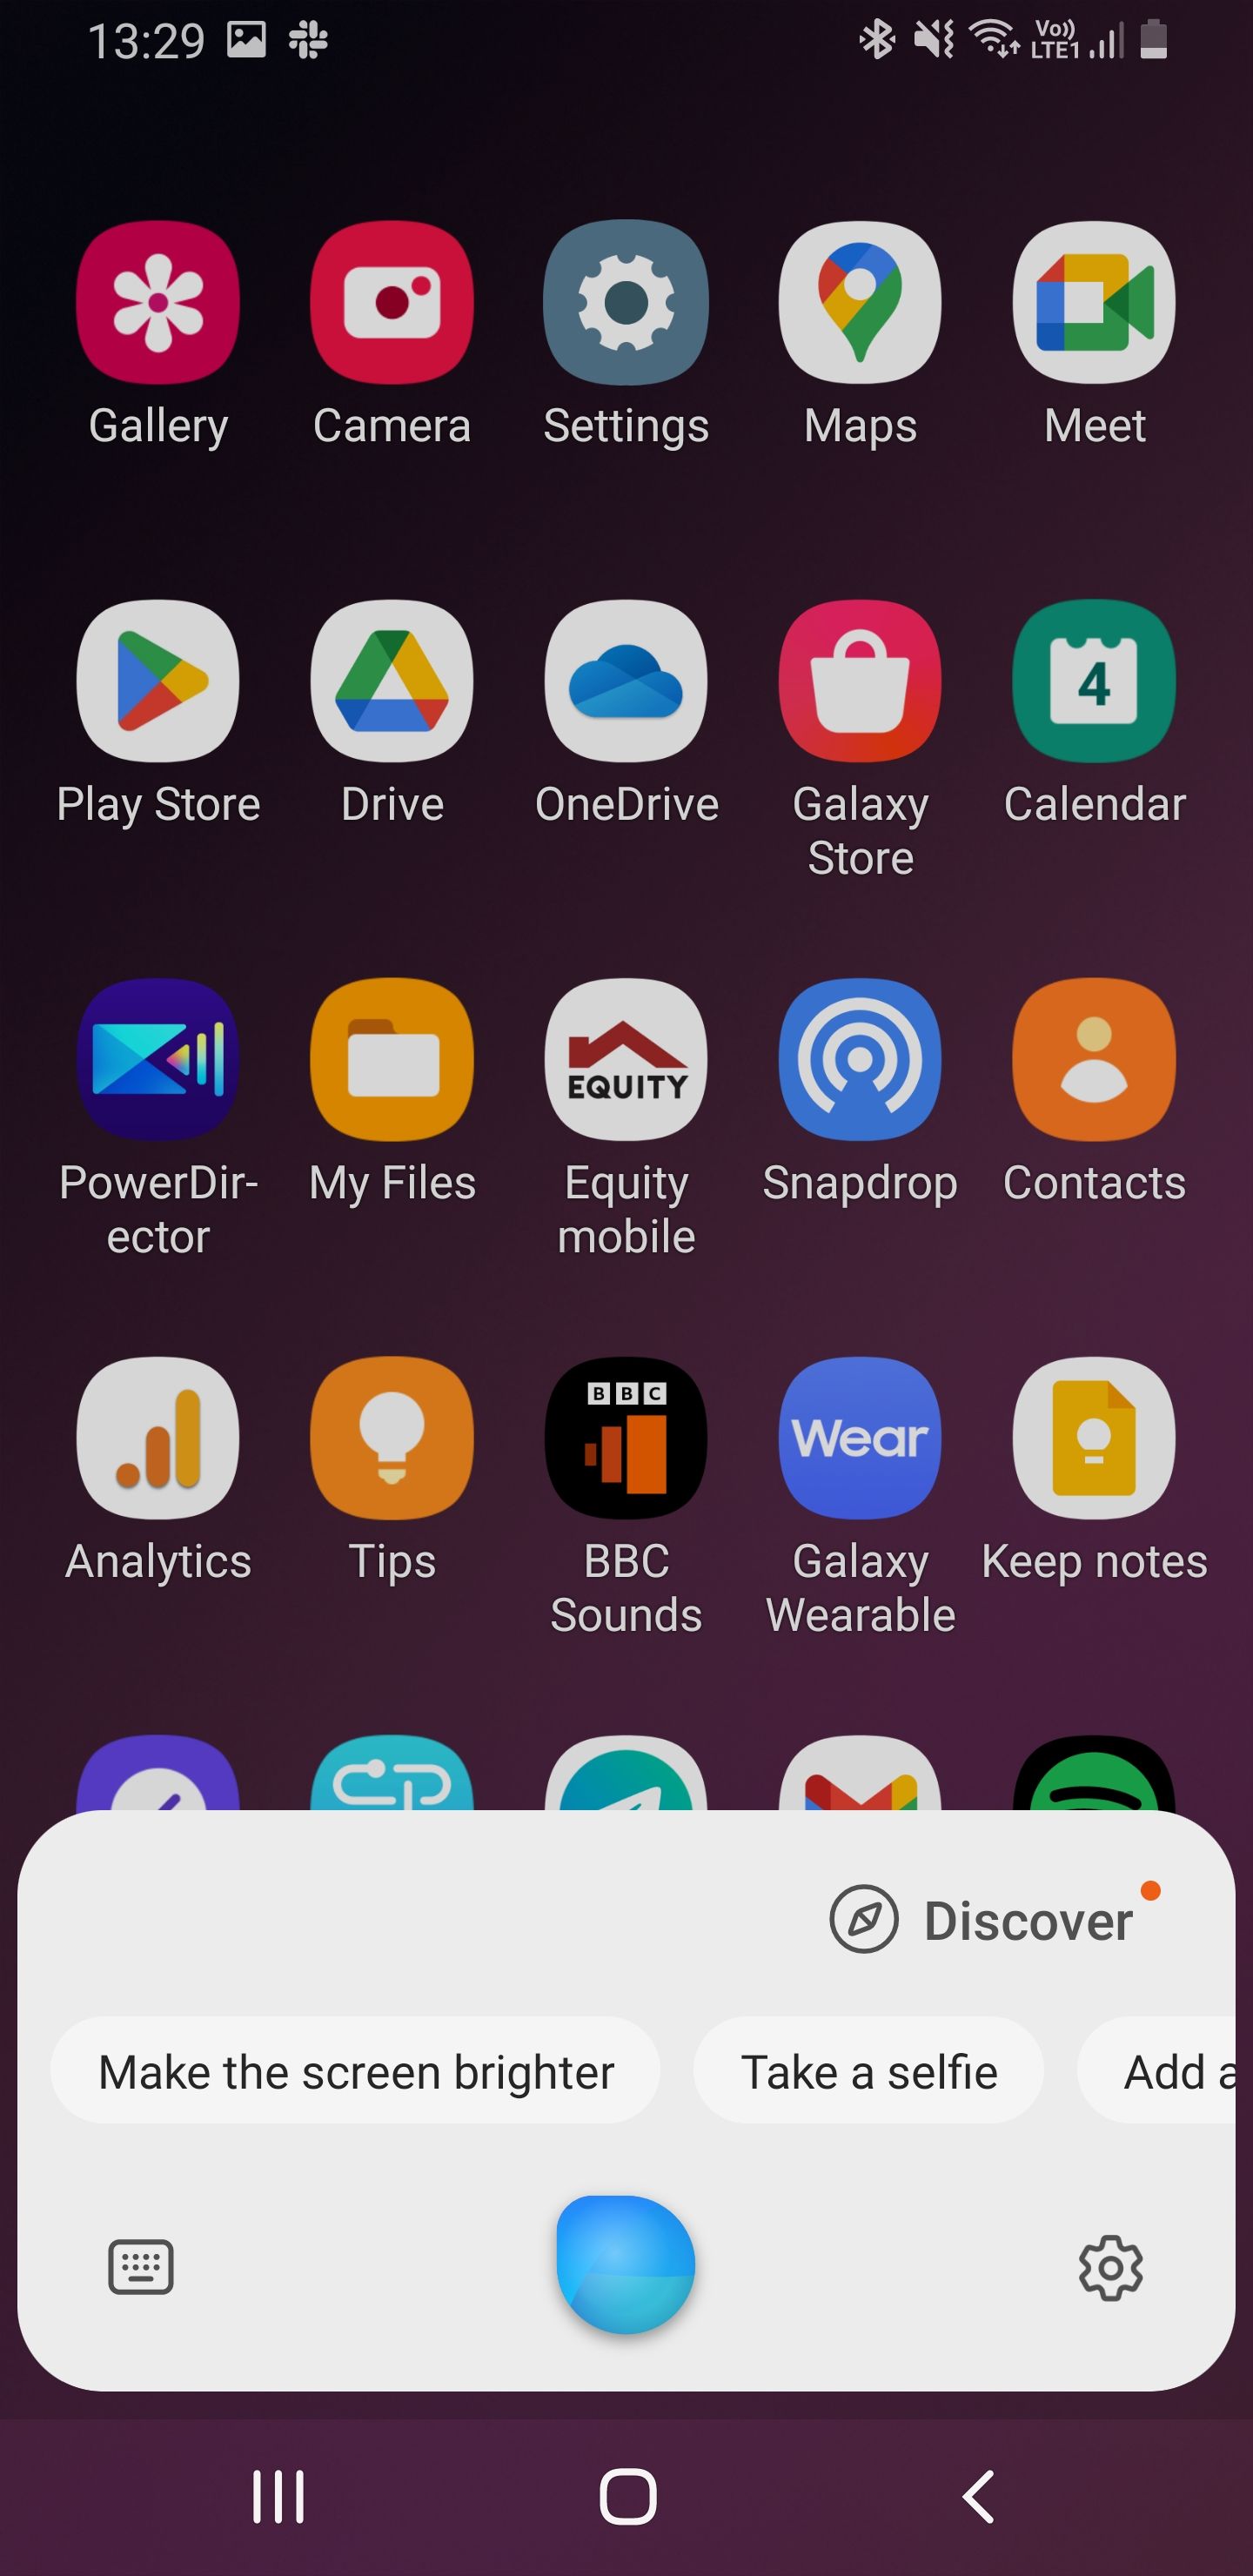 Bixby Voice wake-up interface on a Samsung phone